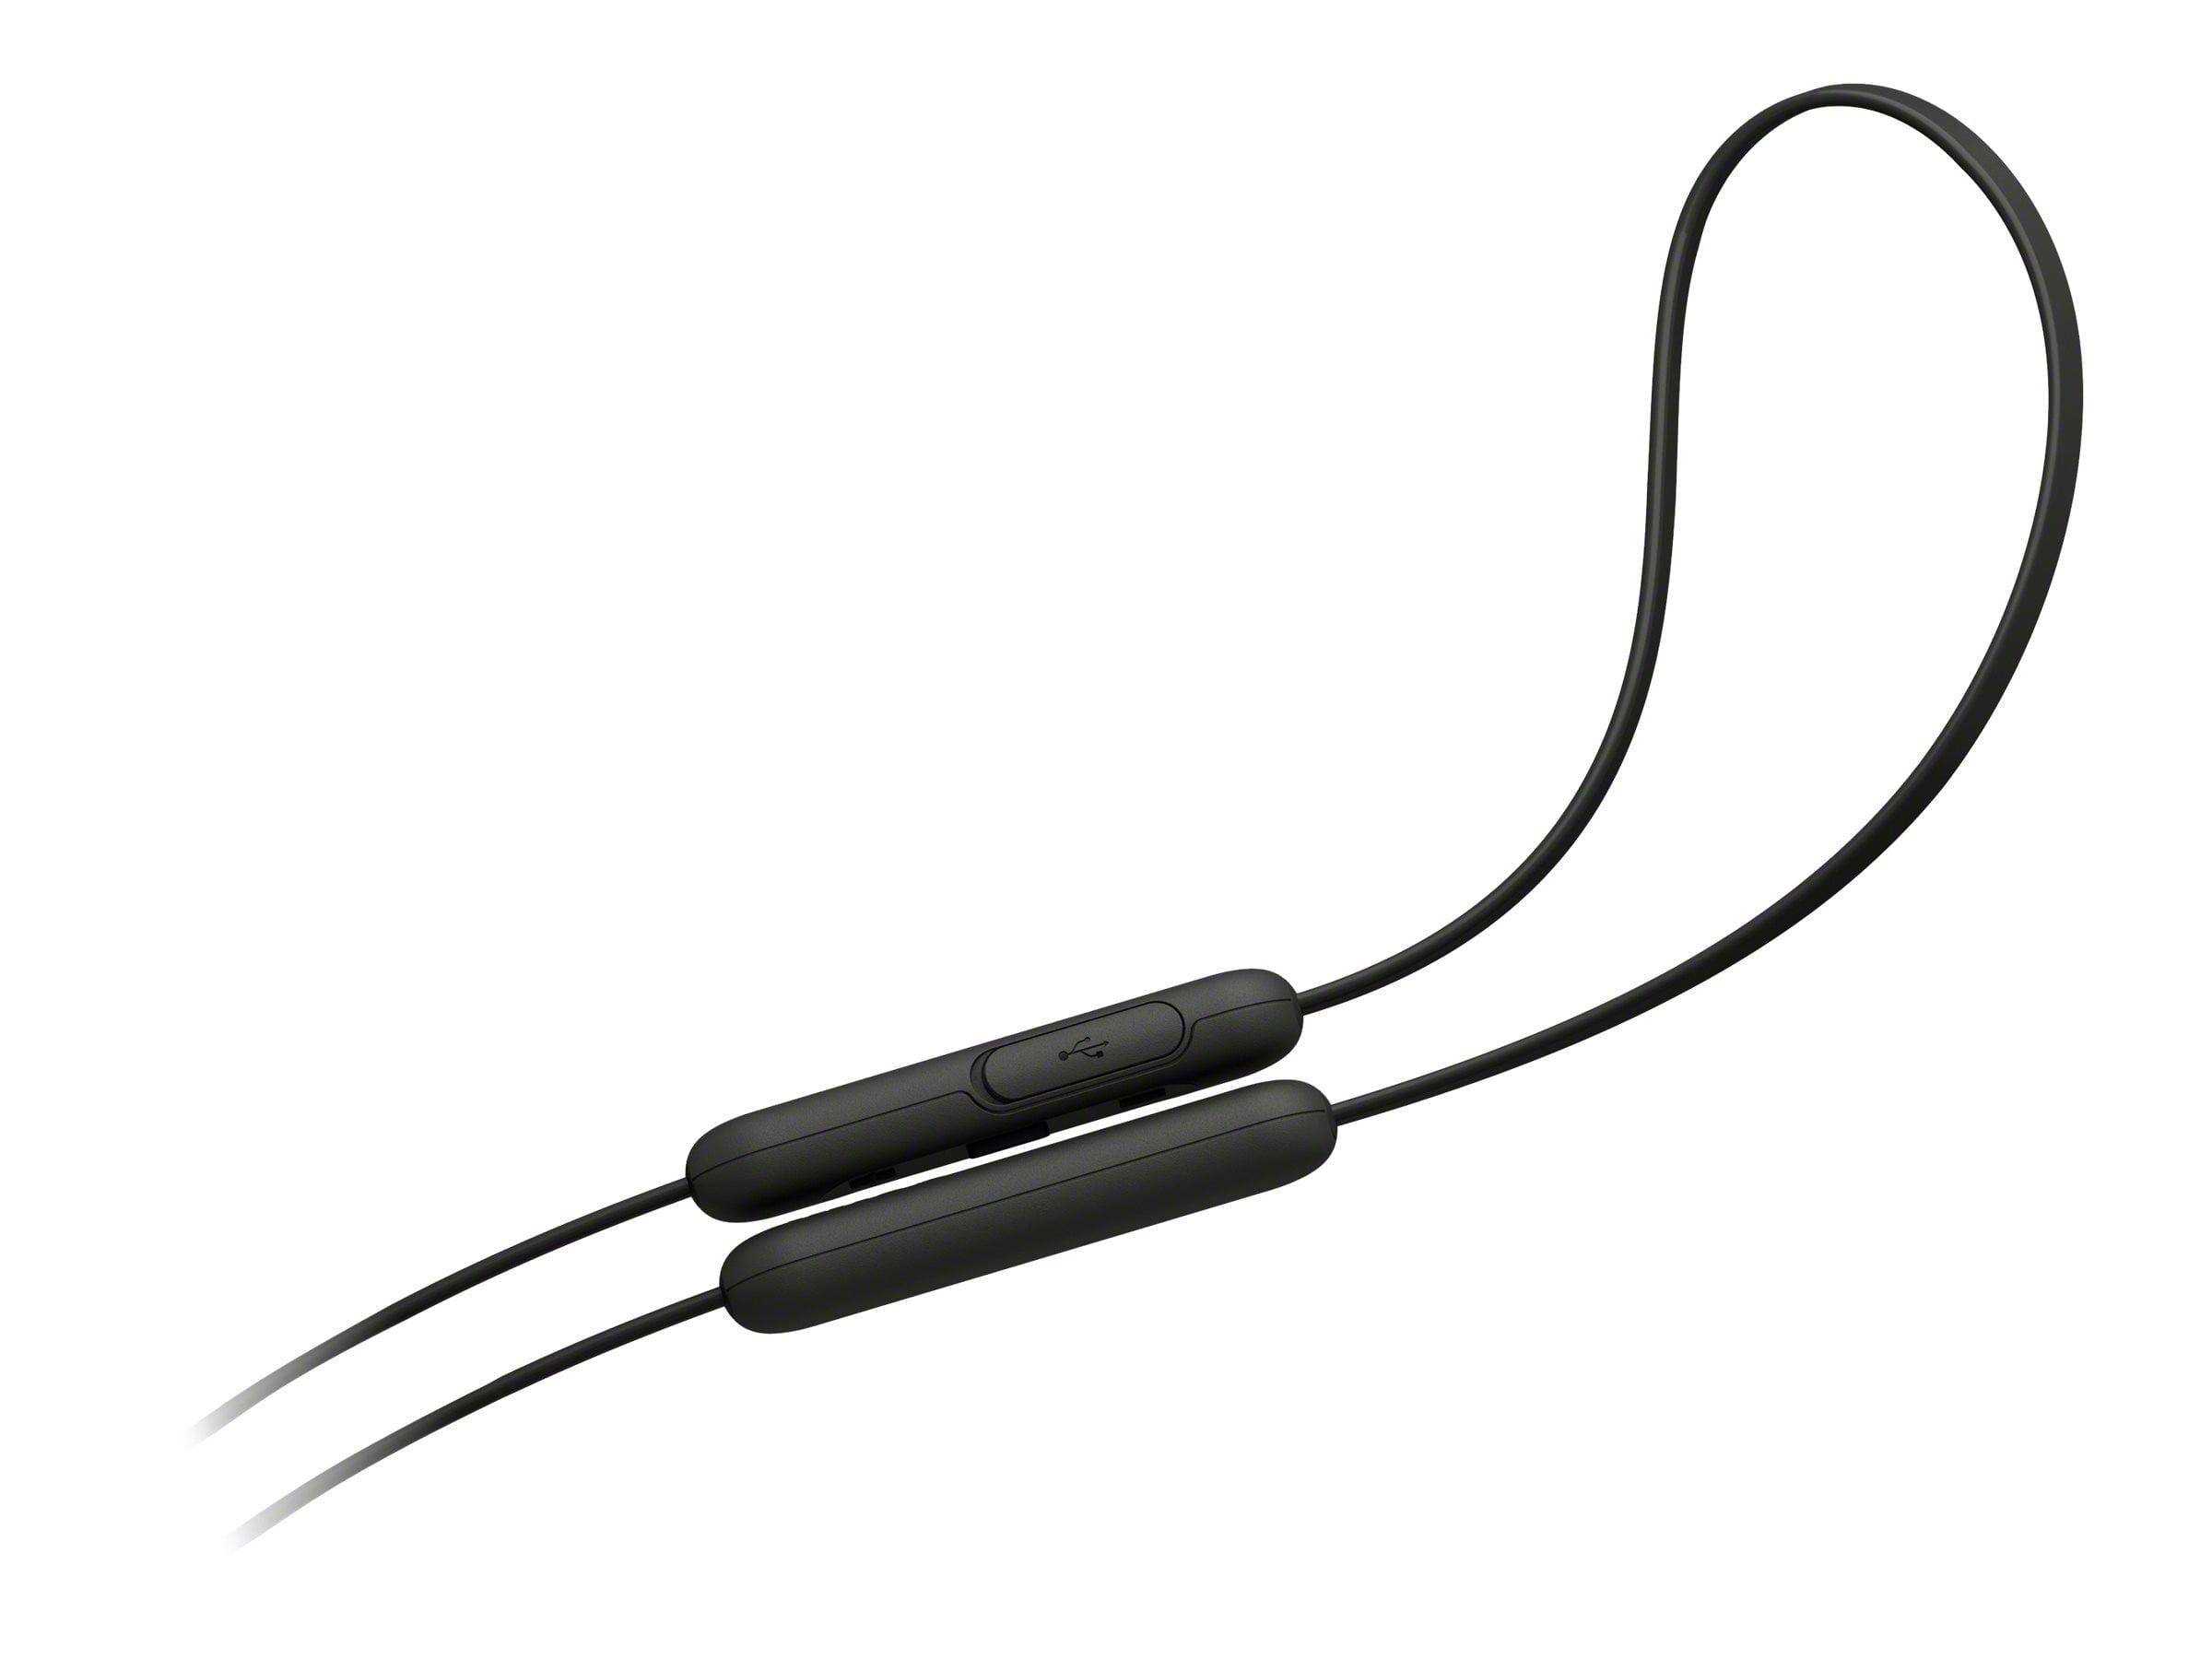 Sony Wireless In-Ear Headphones with Microphone